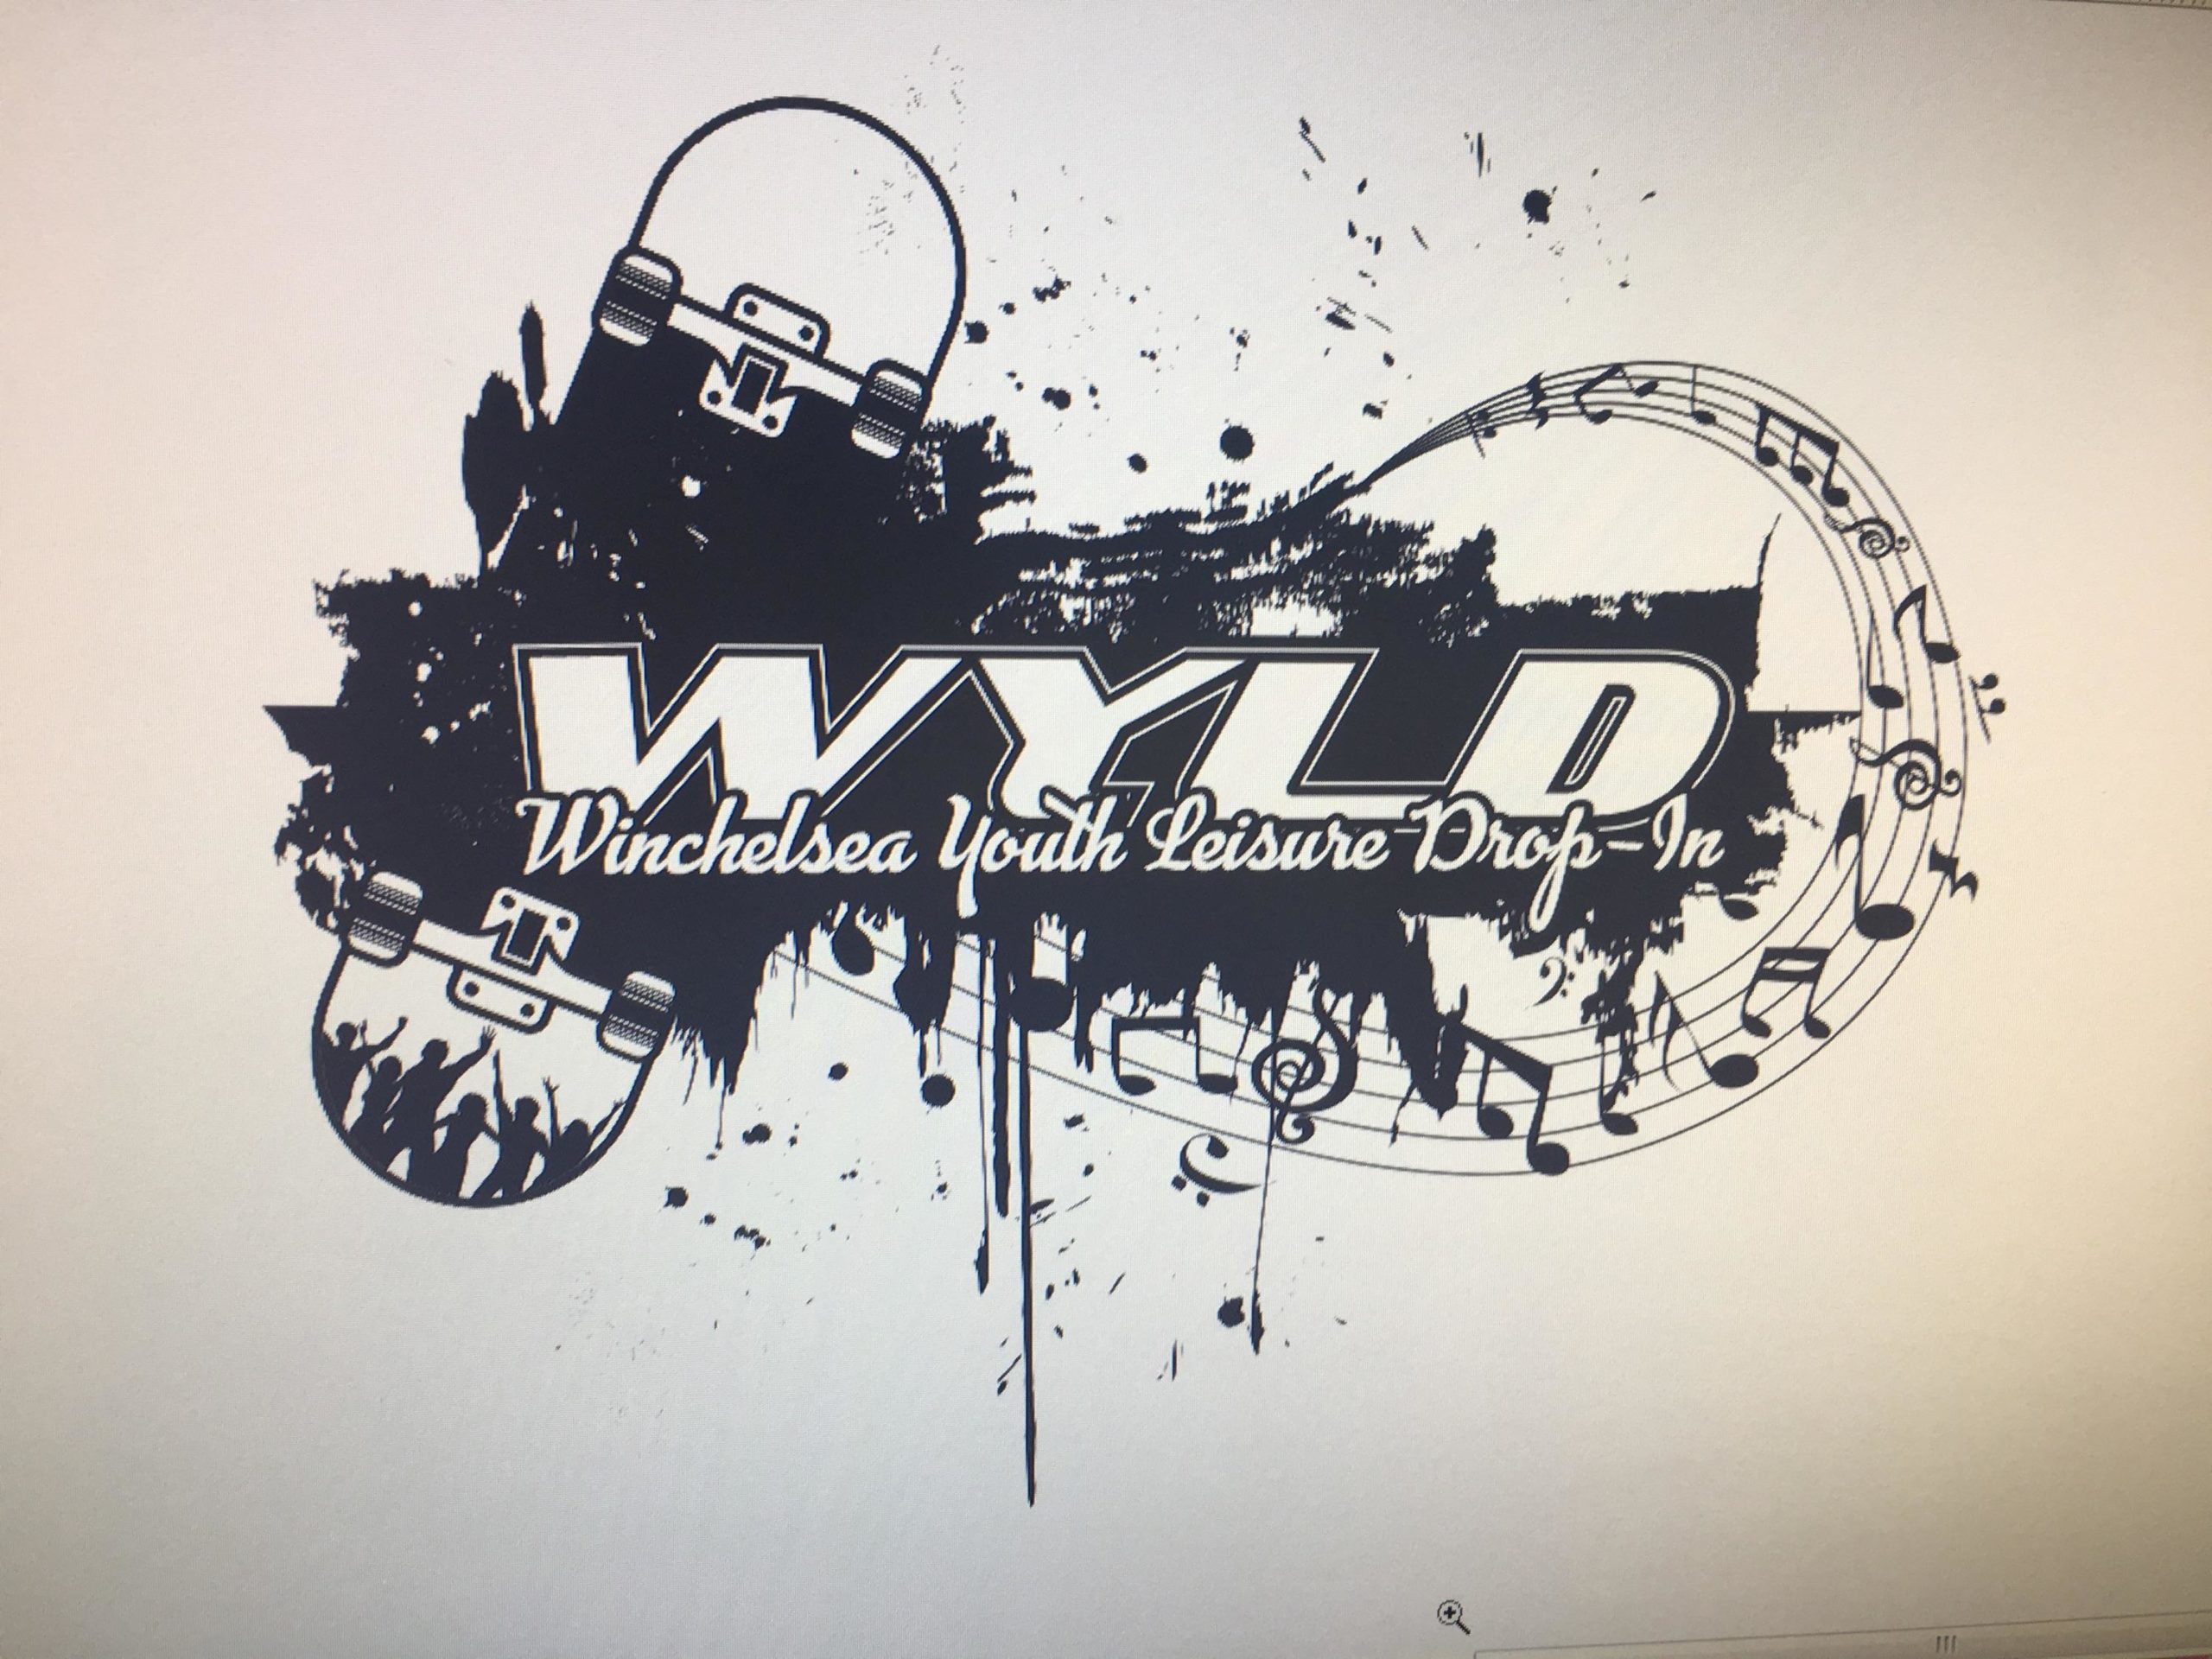 WYLD logo